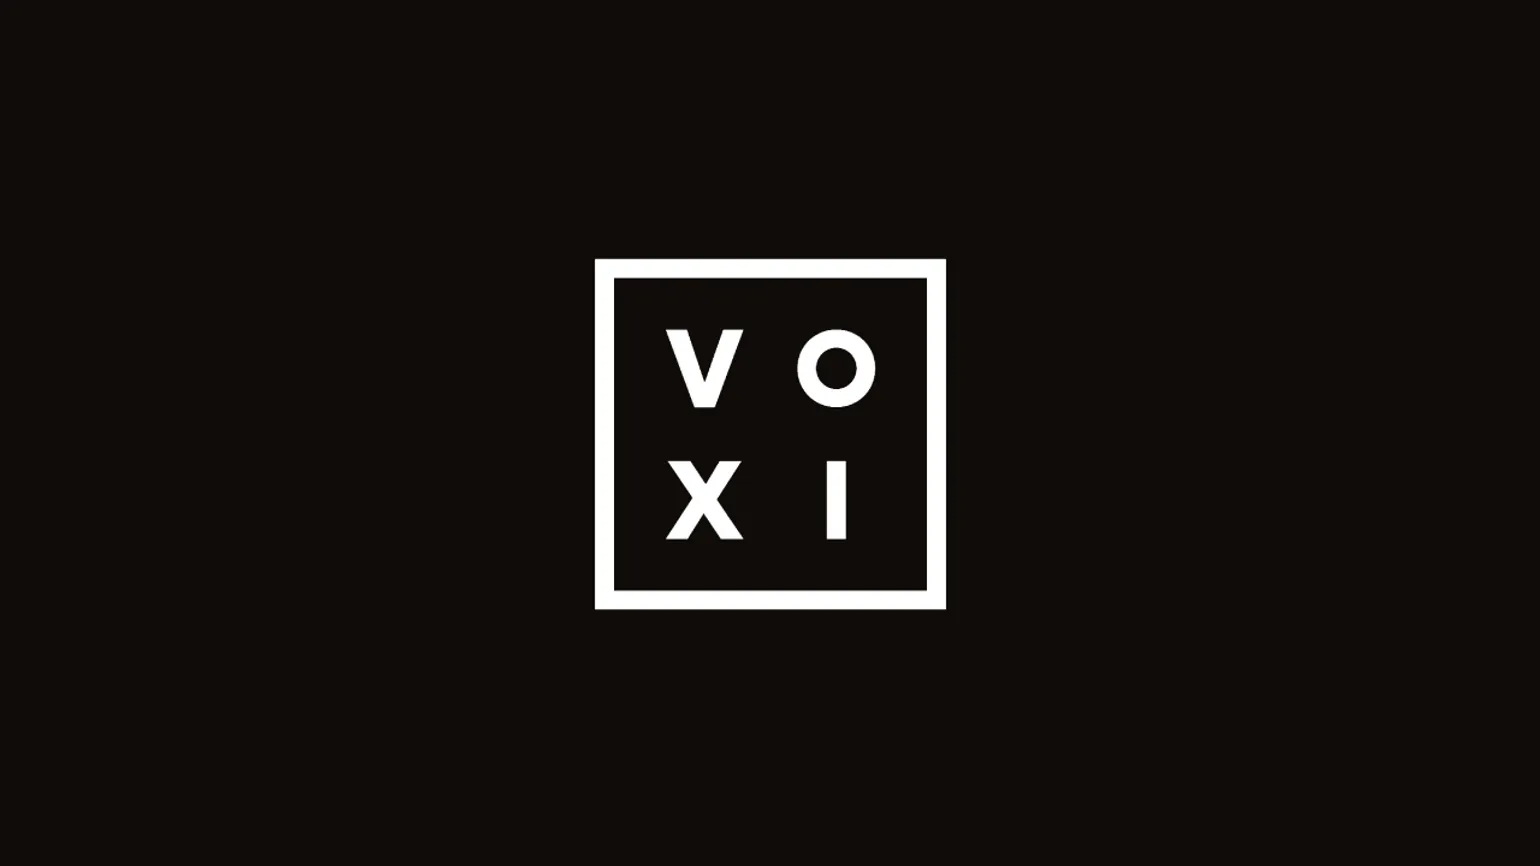 VOXI added 26,000 customers last quarter